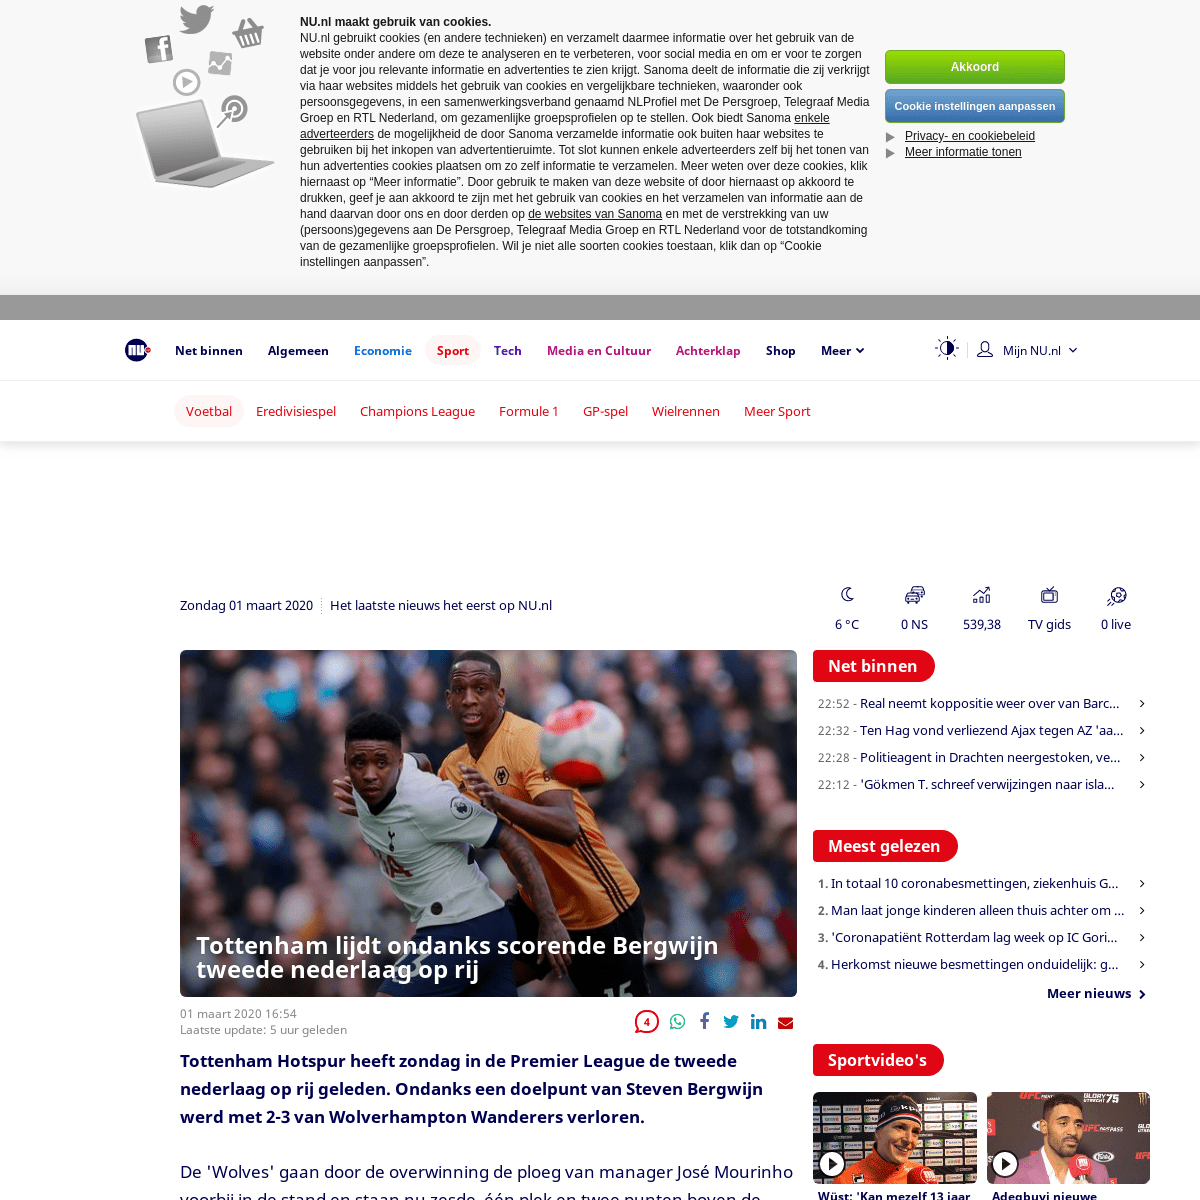 A complete backup of www.nu.nl/voetbal/6034374/tottenham-lijdt-ondanks-scorende-bergwijn-tweede-nederlaag-op-rij.html